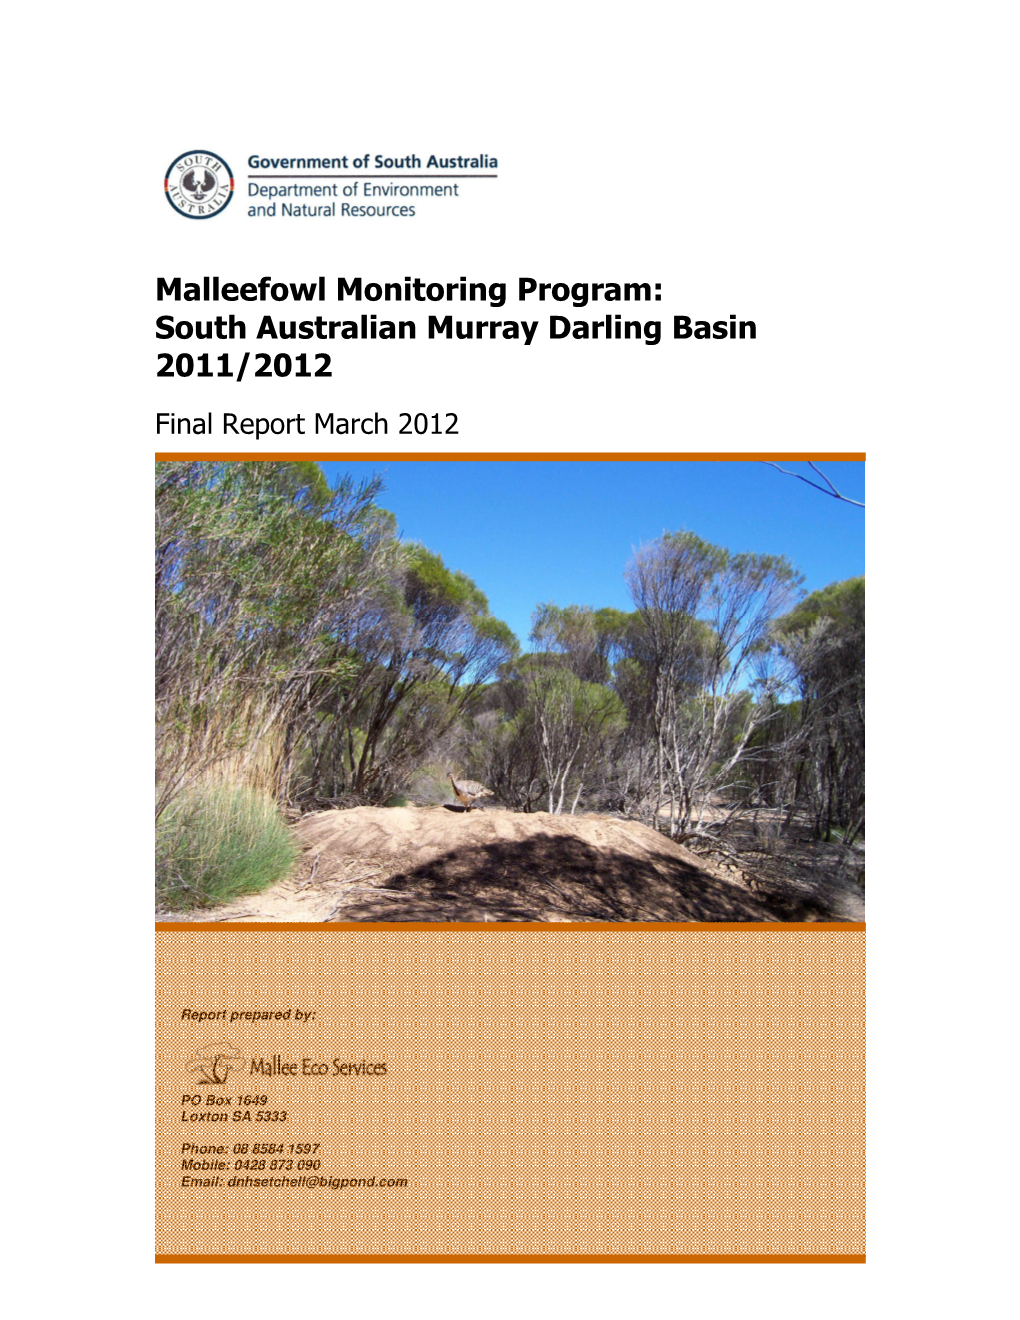 Malleefowl Monitoring Program: South Australian Murray Darling Basin 2011/2012